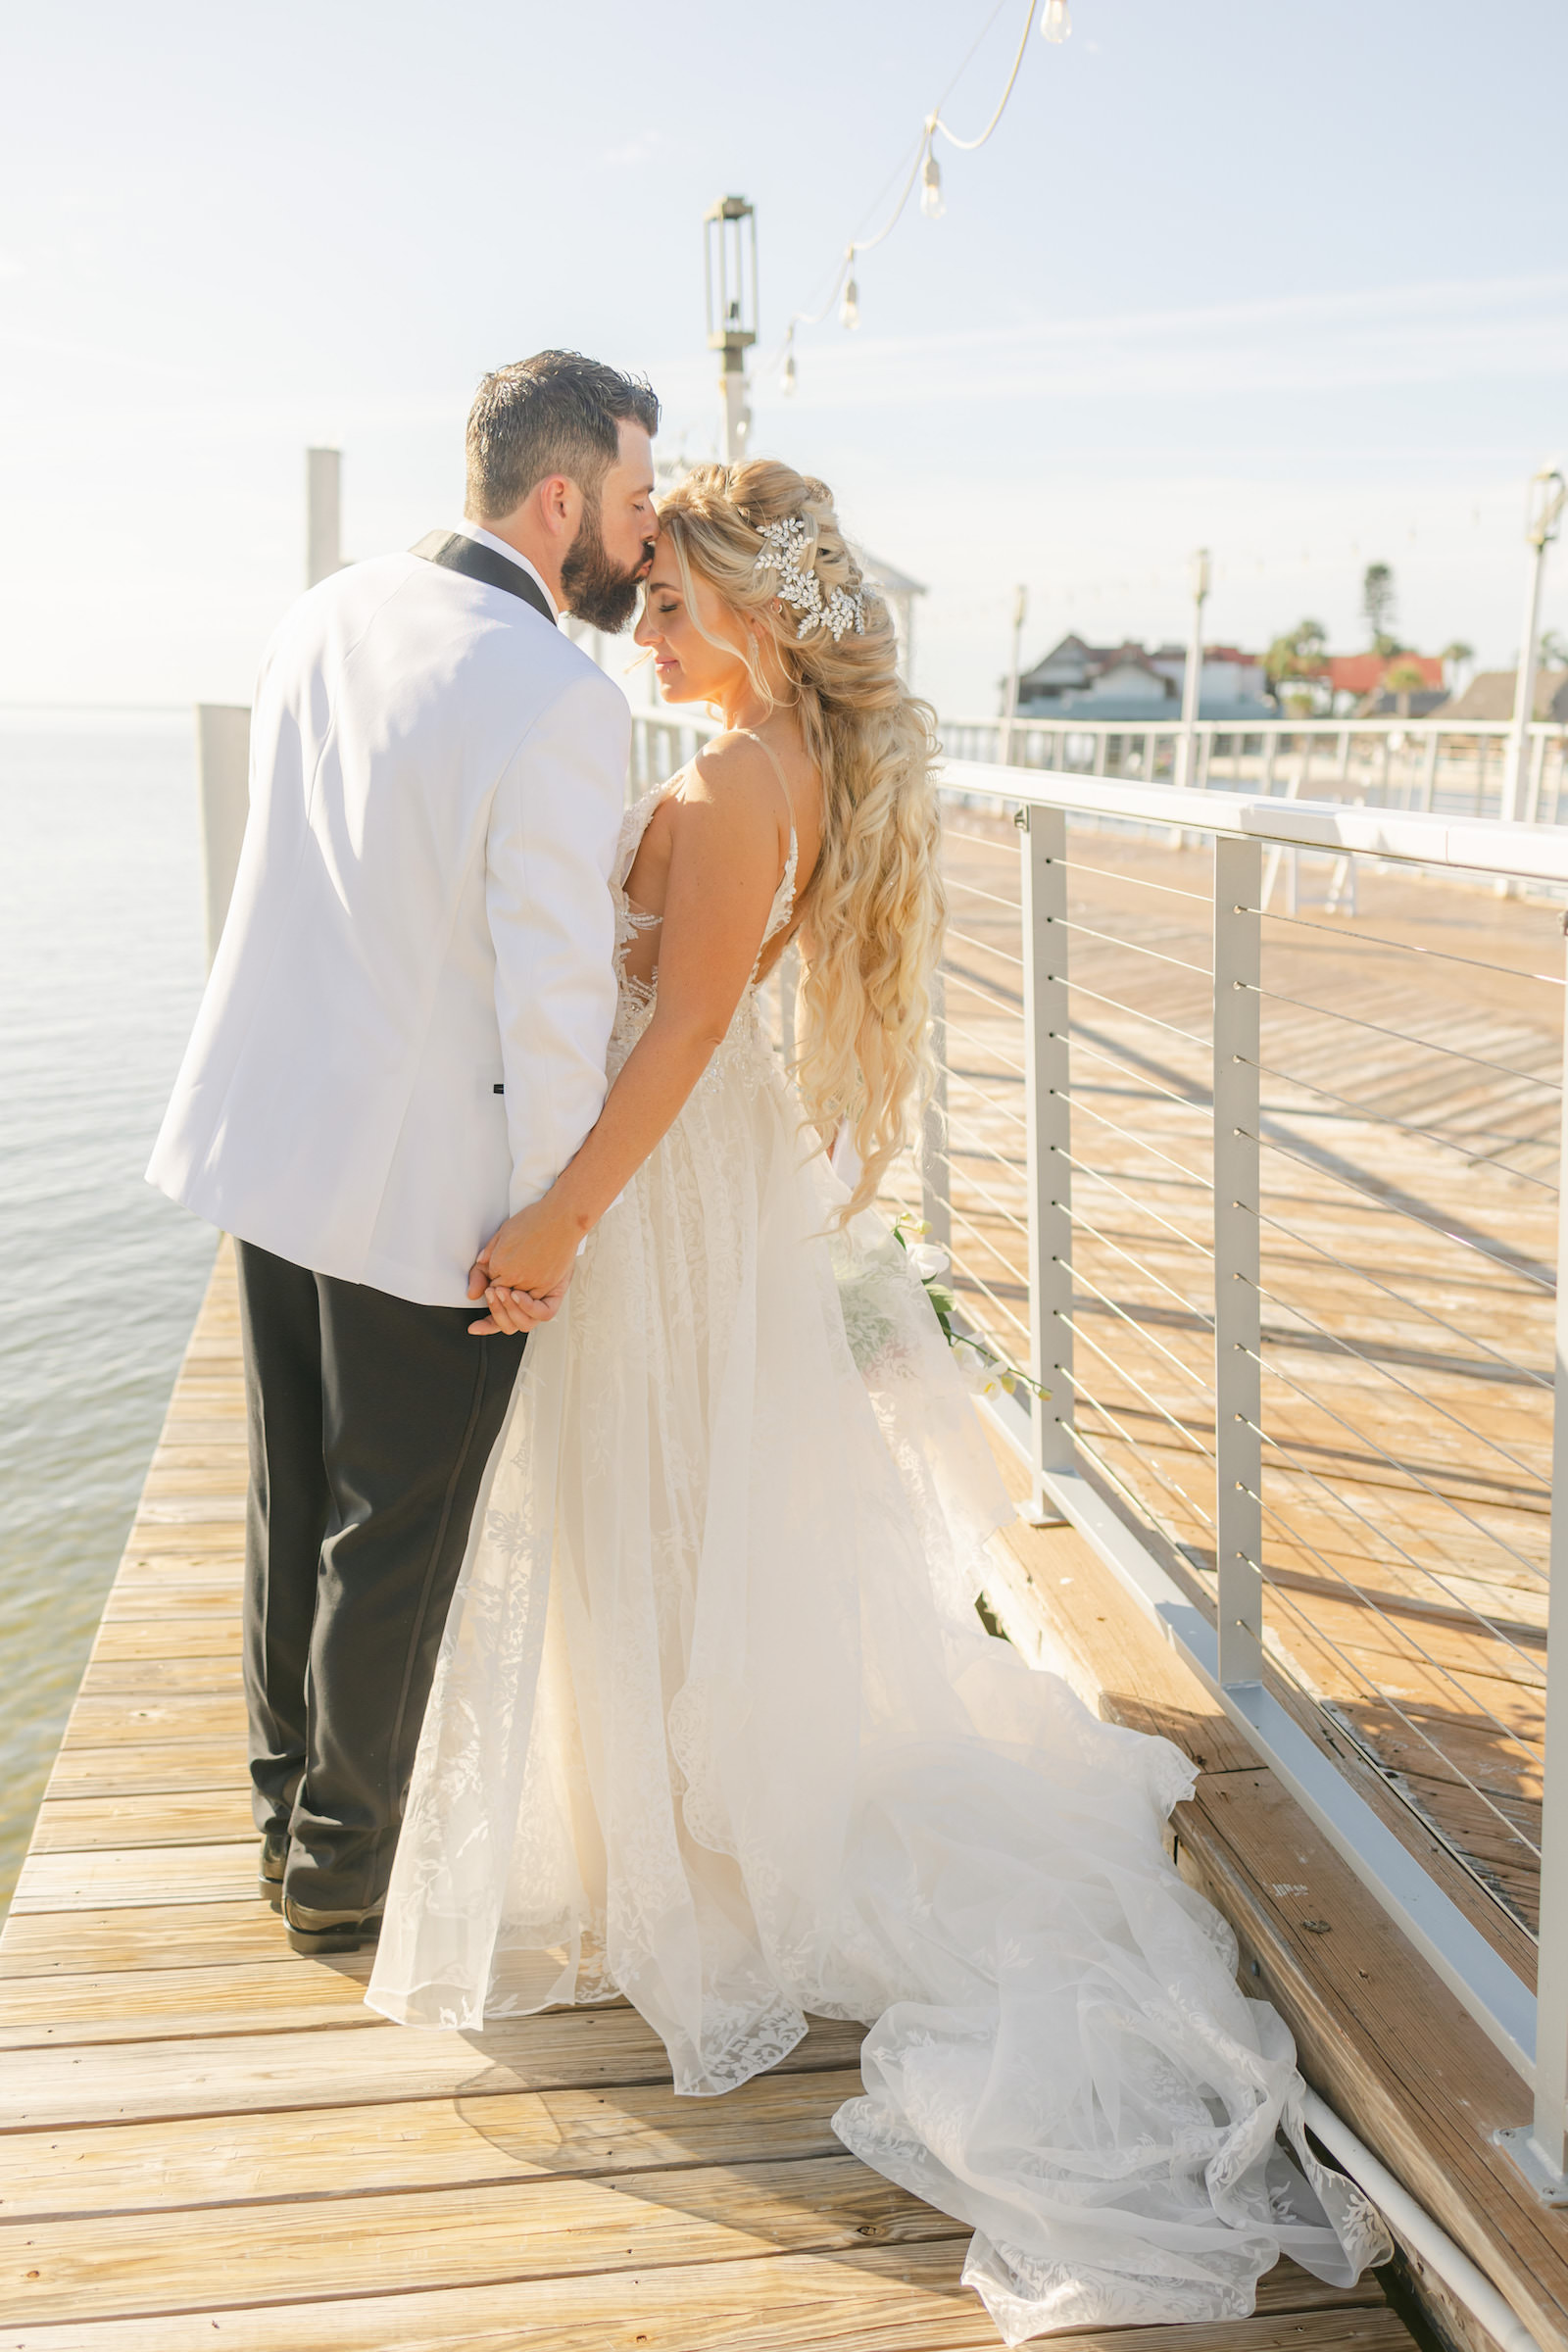 Florida Bride and Groom Sunset Wedding Portrait on Dock | Tampa Bay Wedding Venue The Godfrey